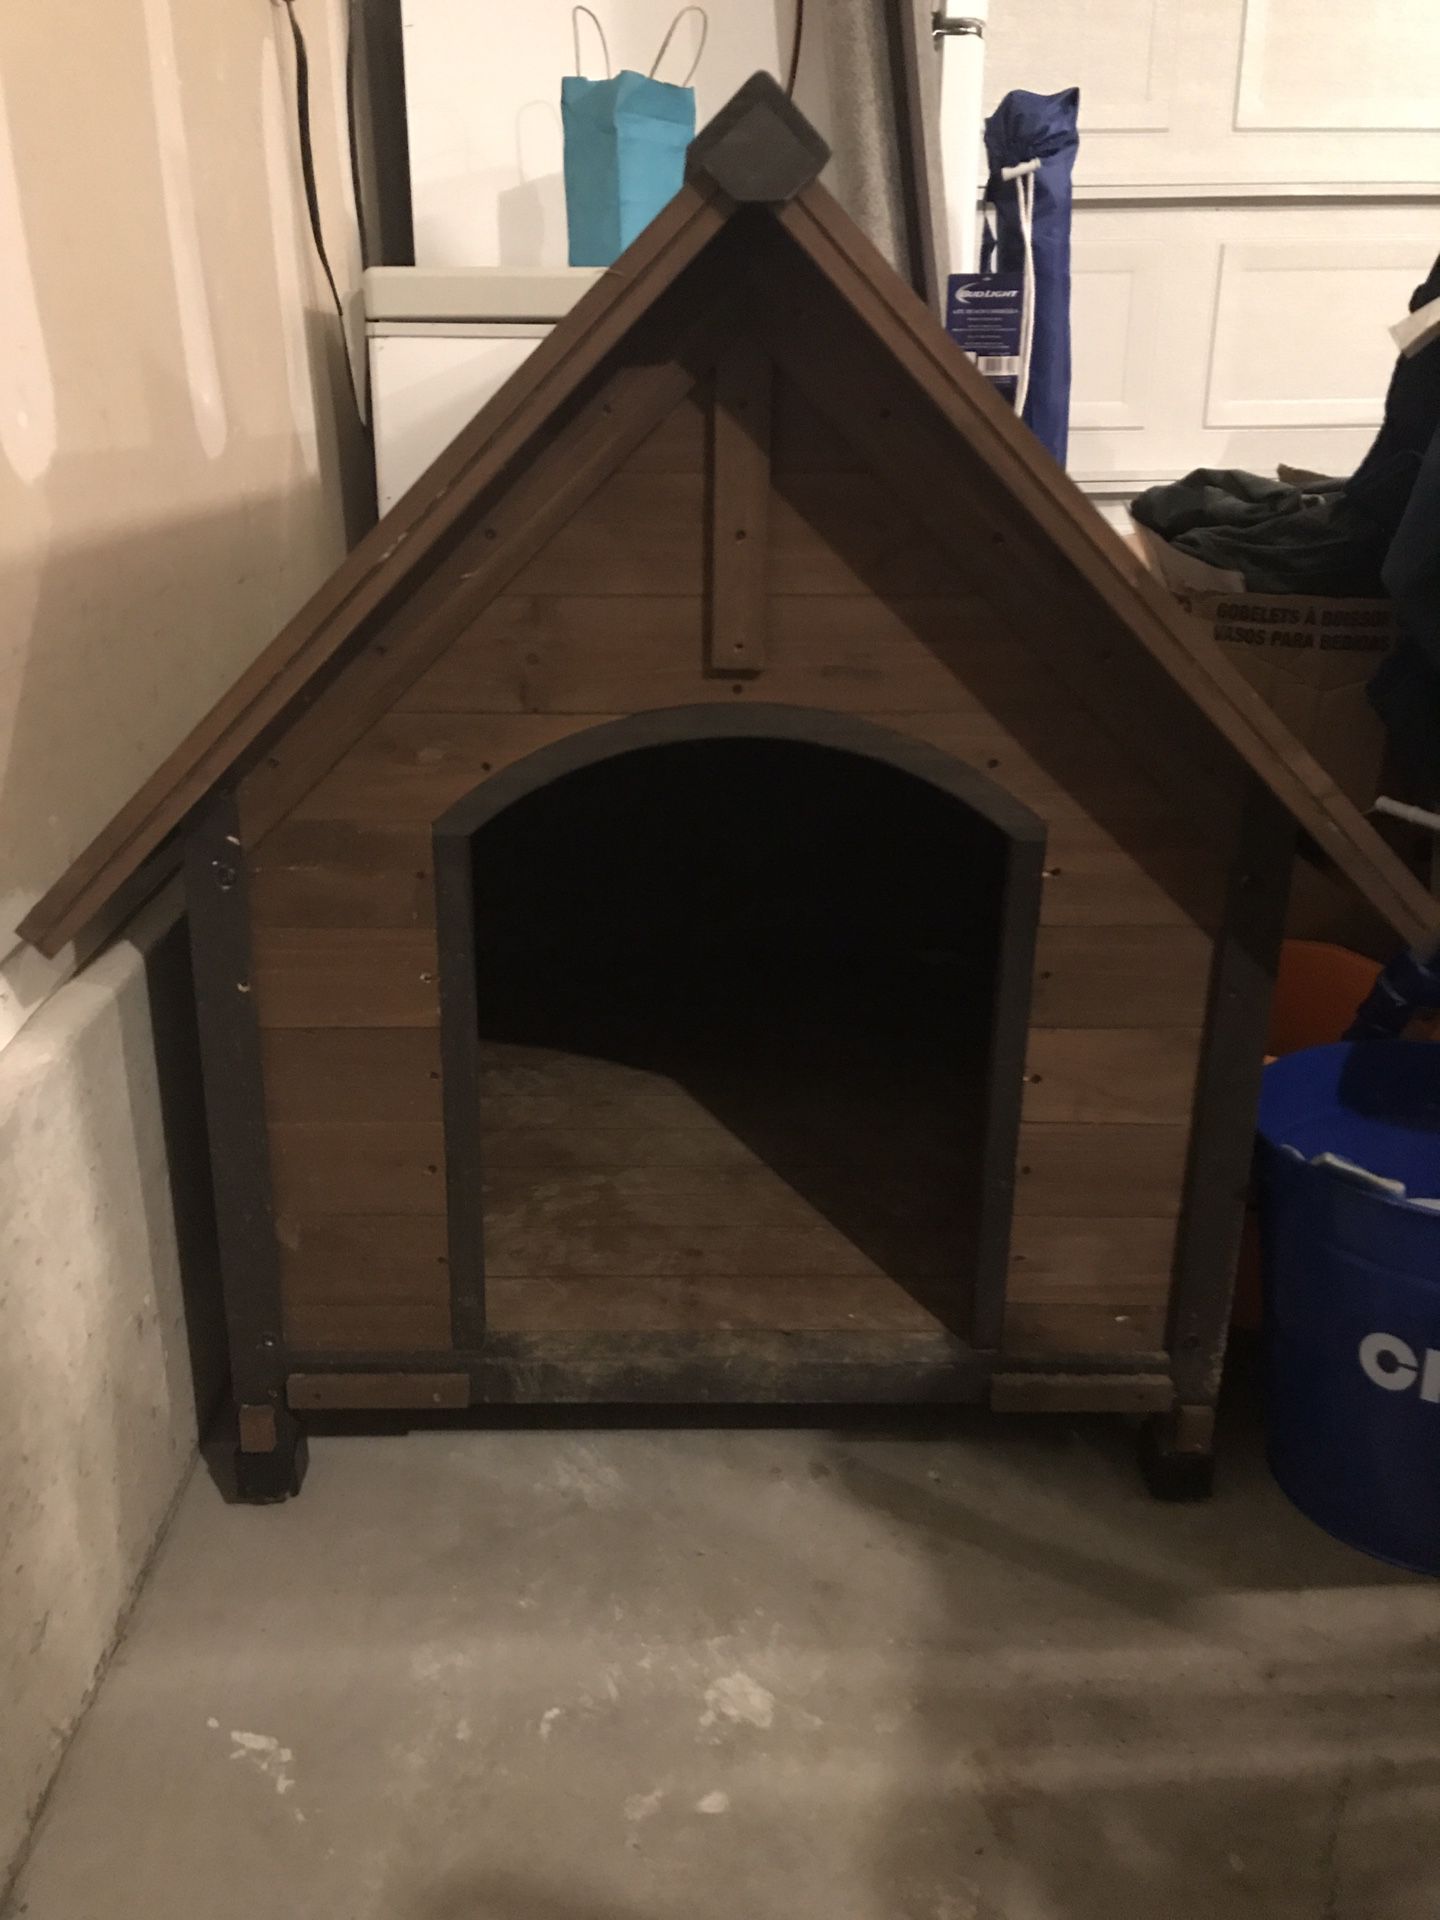 Barely used dog house